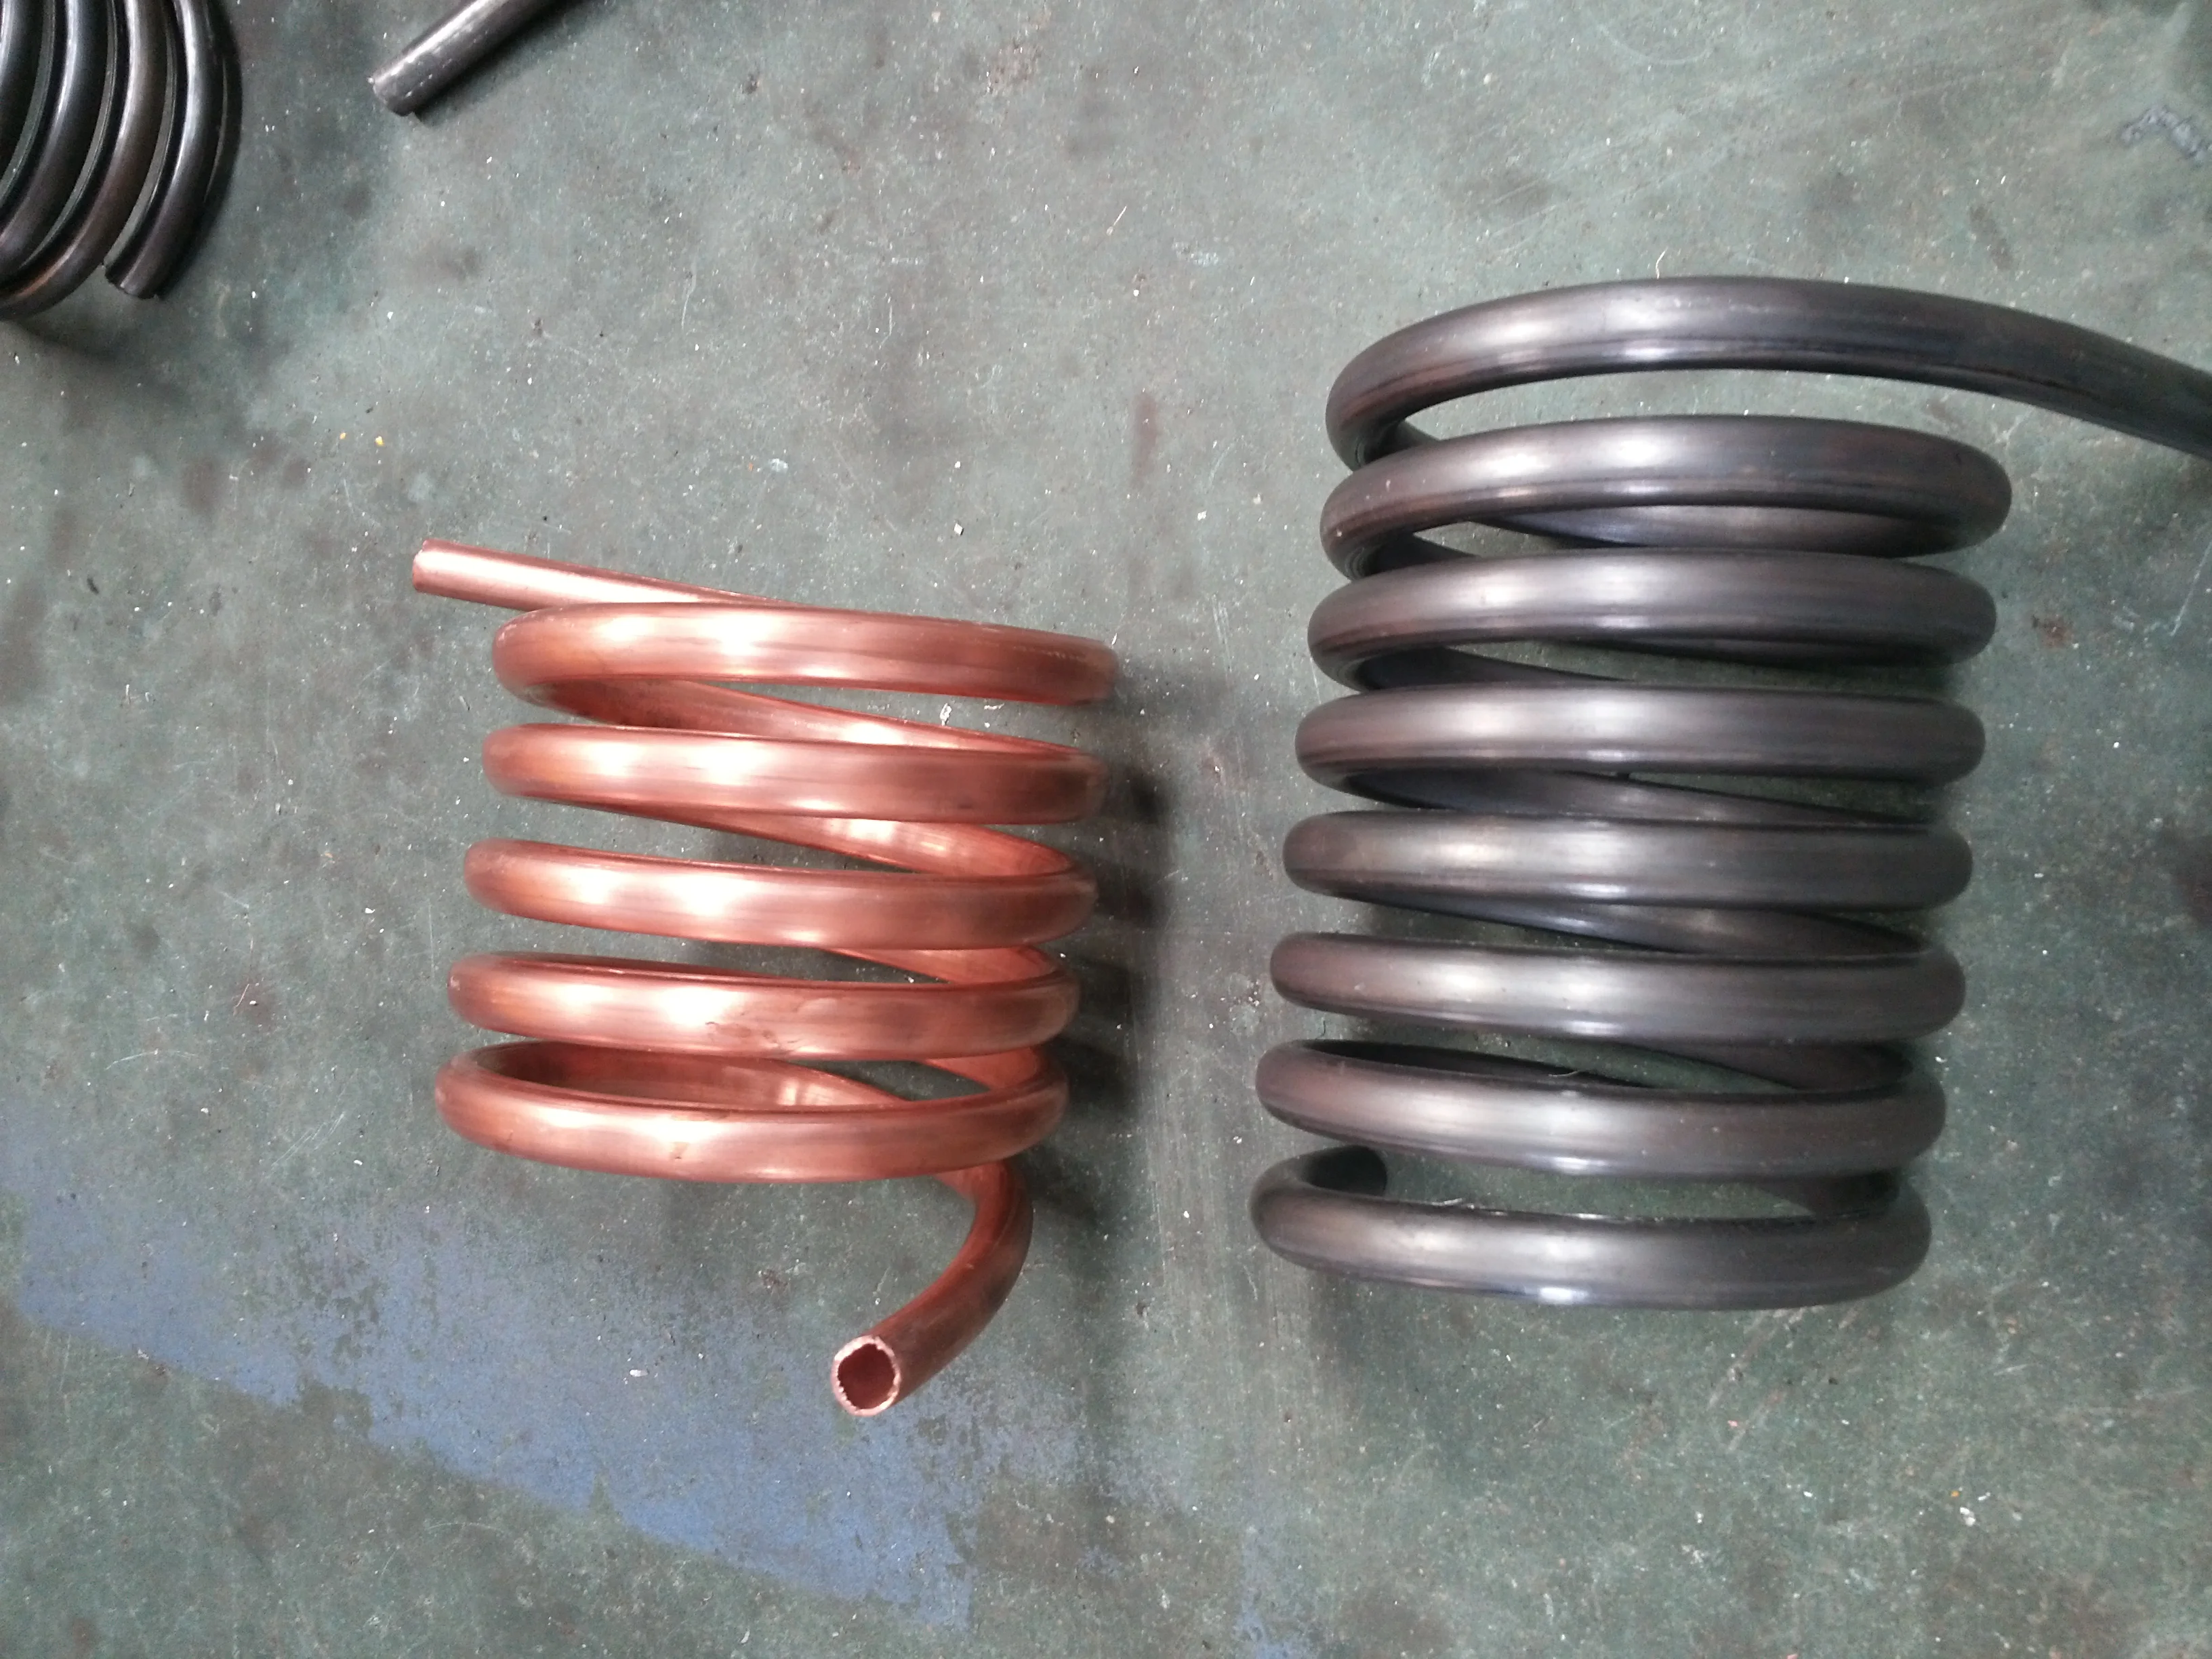 
Automatic hydraulic cnc copper tube bending machine 